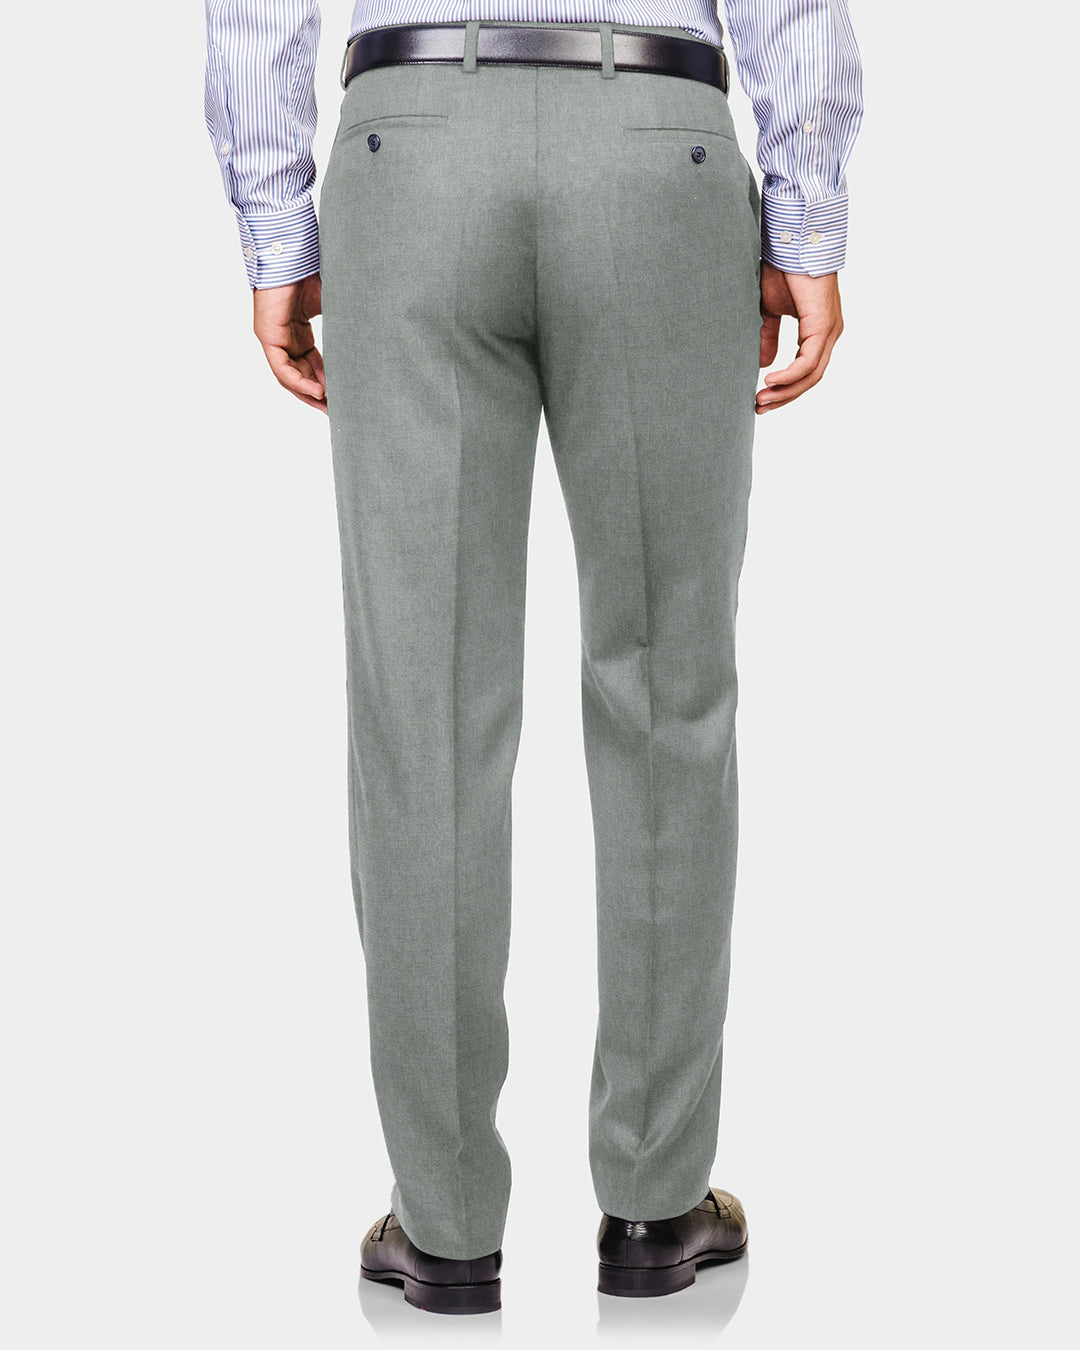 Dugdale Flannel: Light Grey Twill 14 Oz Suit